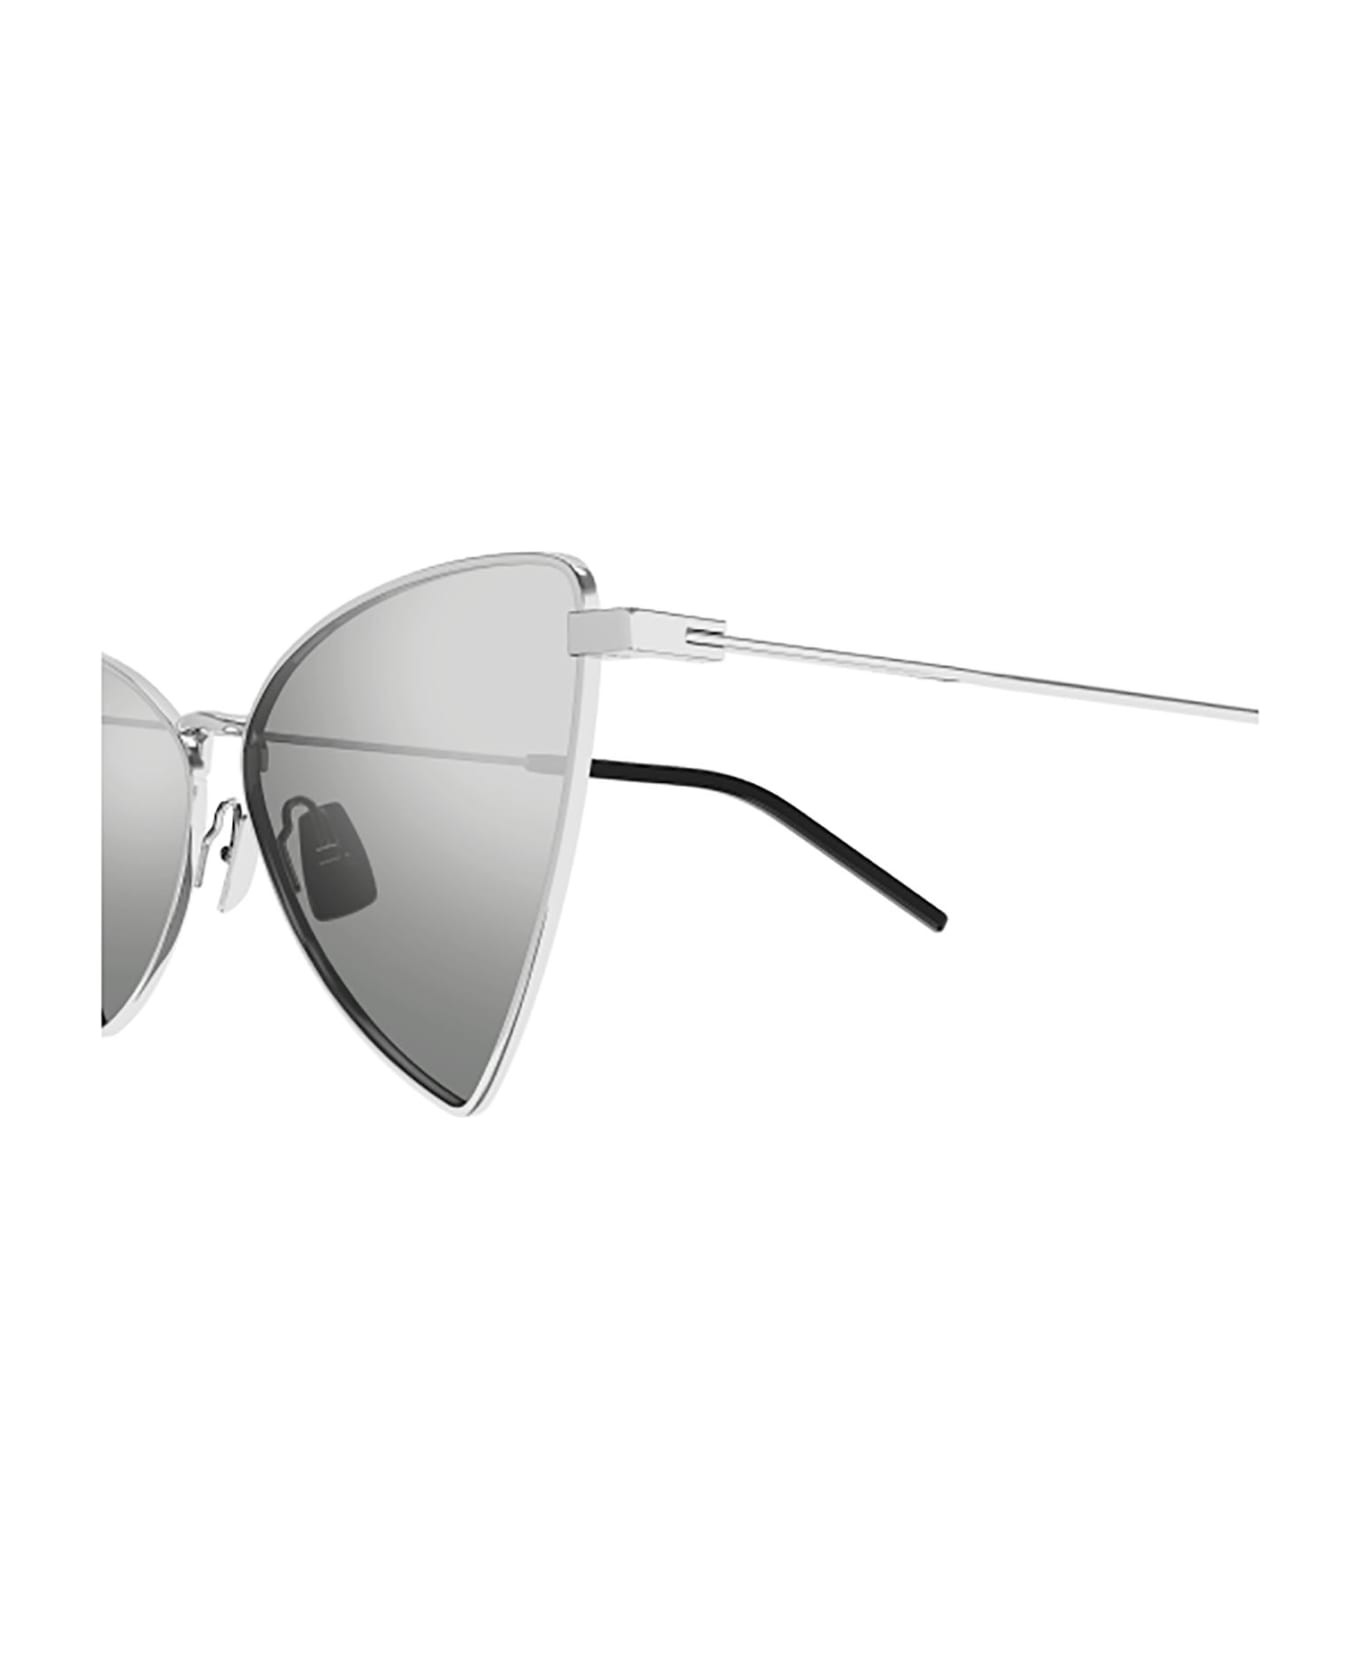 Saint Laurent Eyewear Sl 303 Jerry Sunglasses - 010 silver silver silver